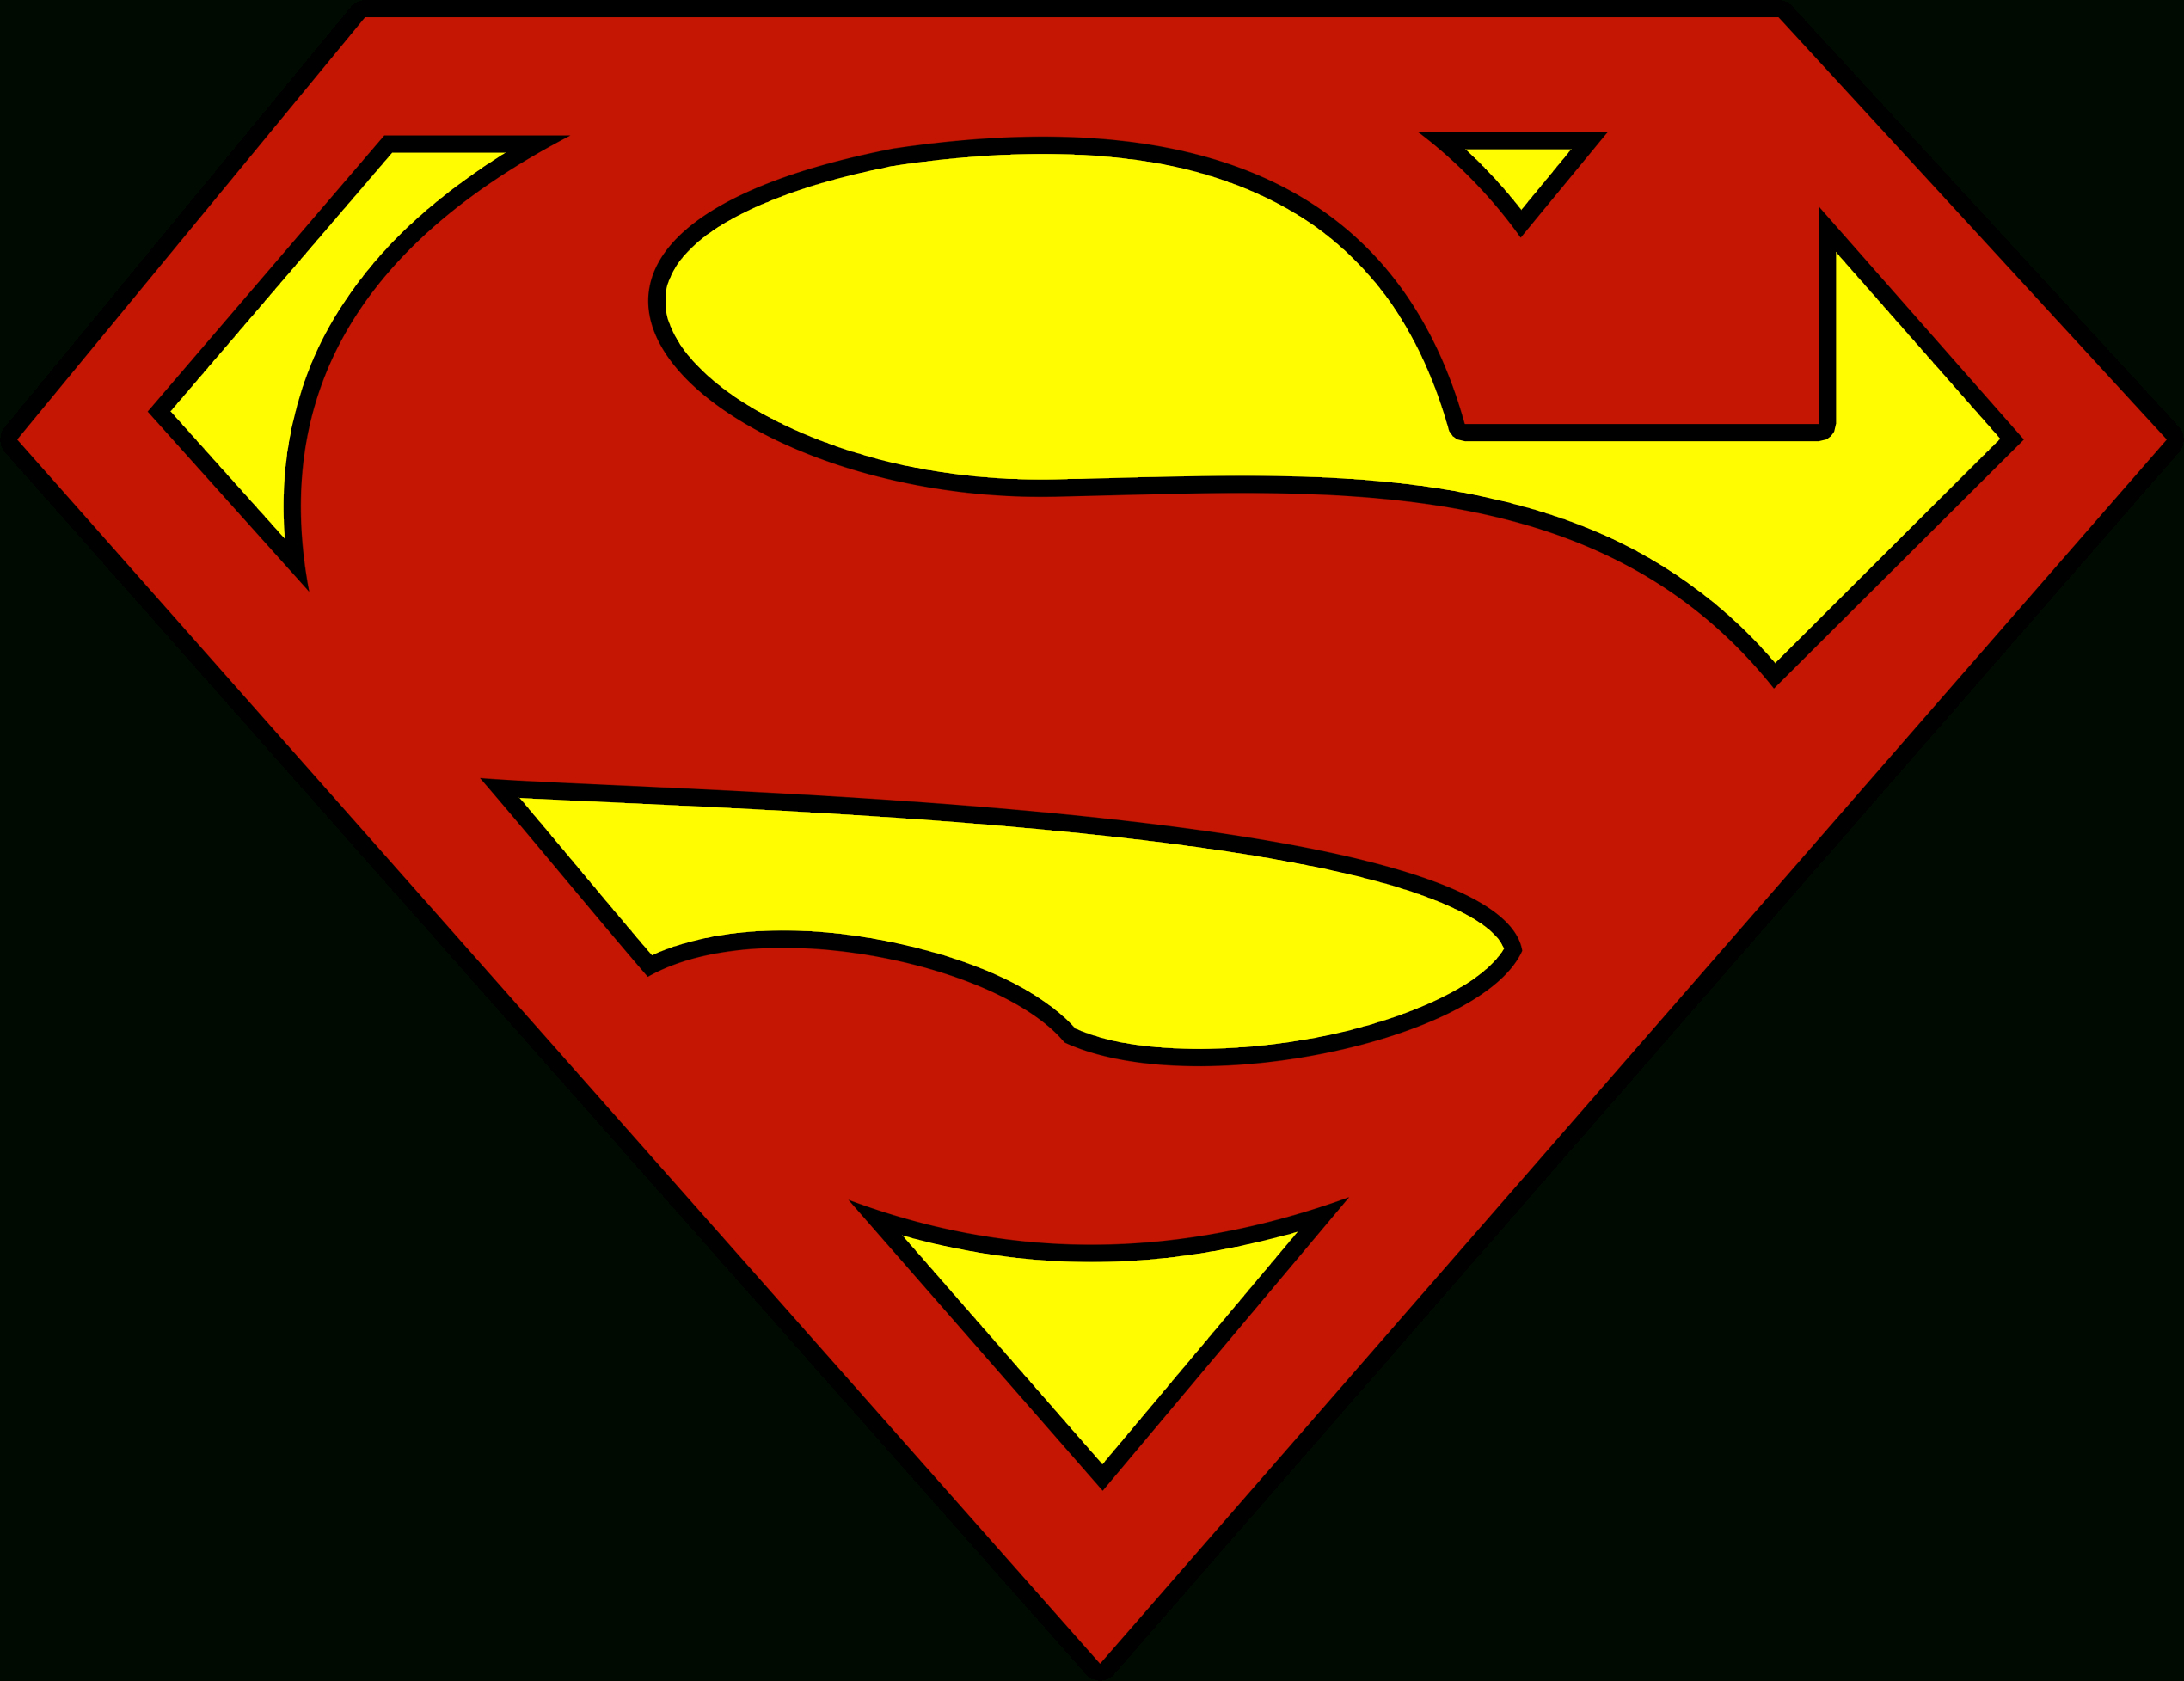 Blank Superman Logos With Blank Superman Logo Template